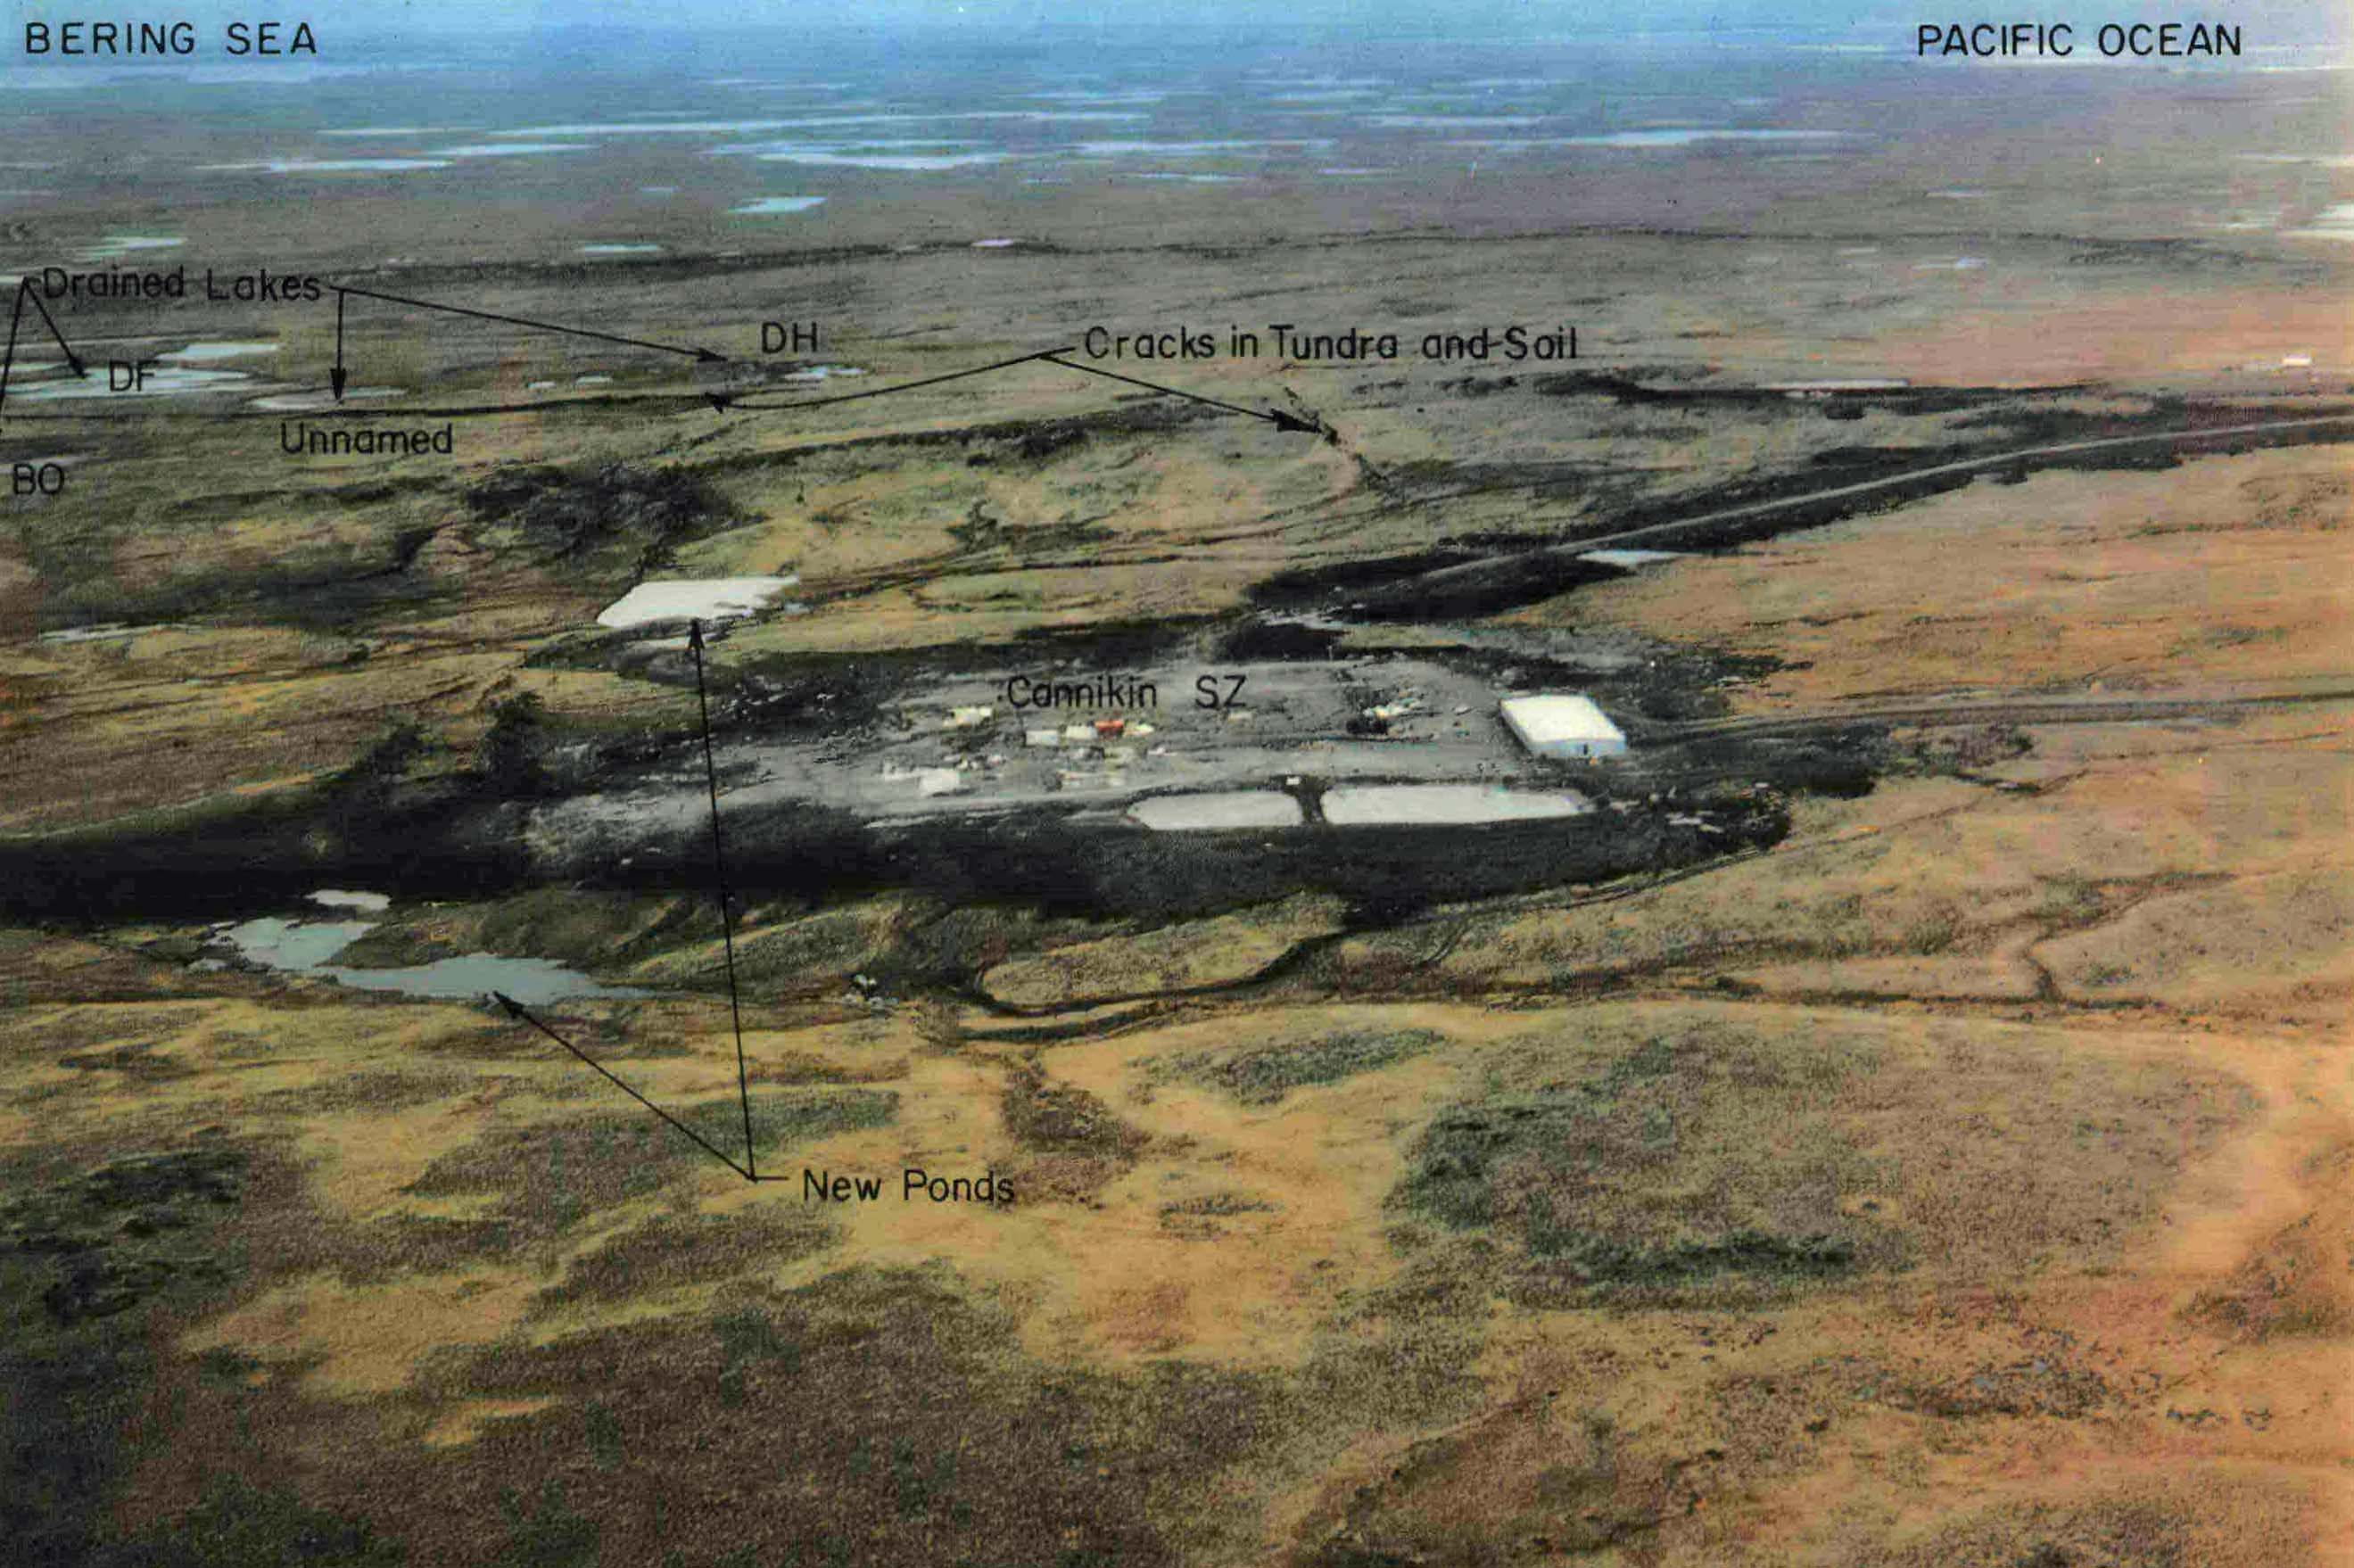 Amchitka Island Nuclear Explosion Site